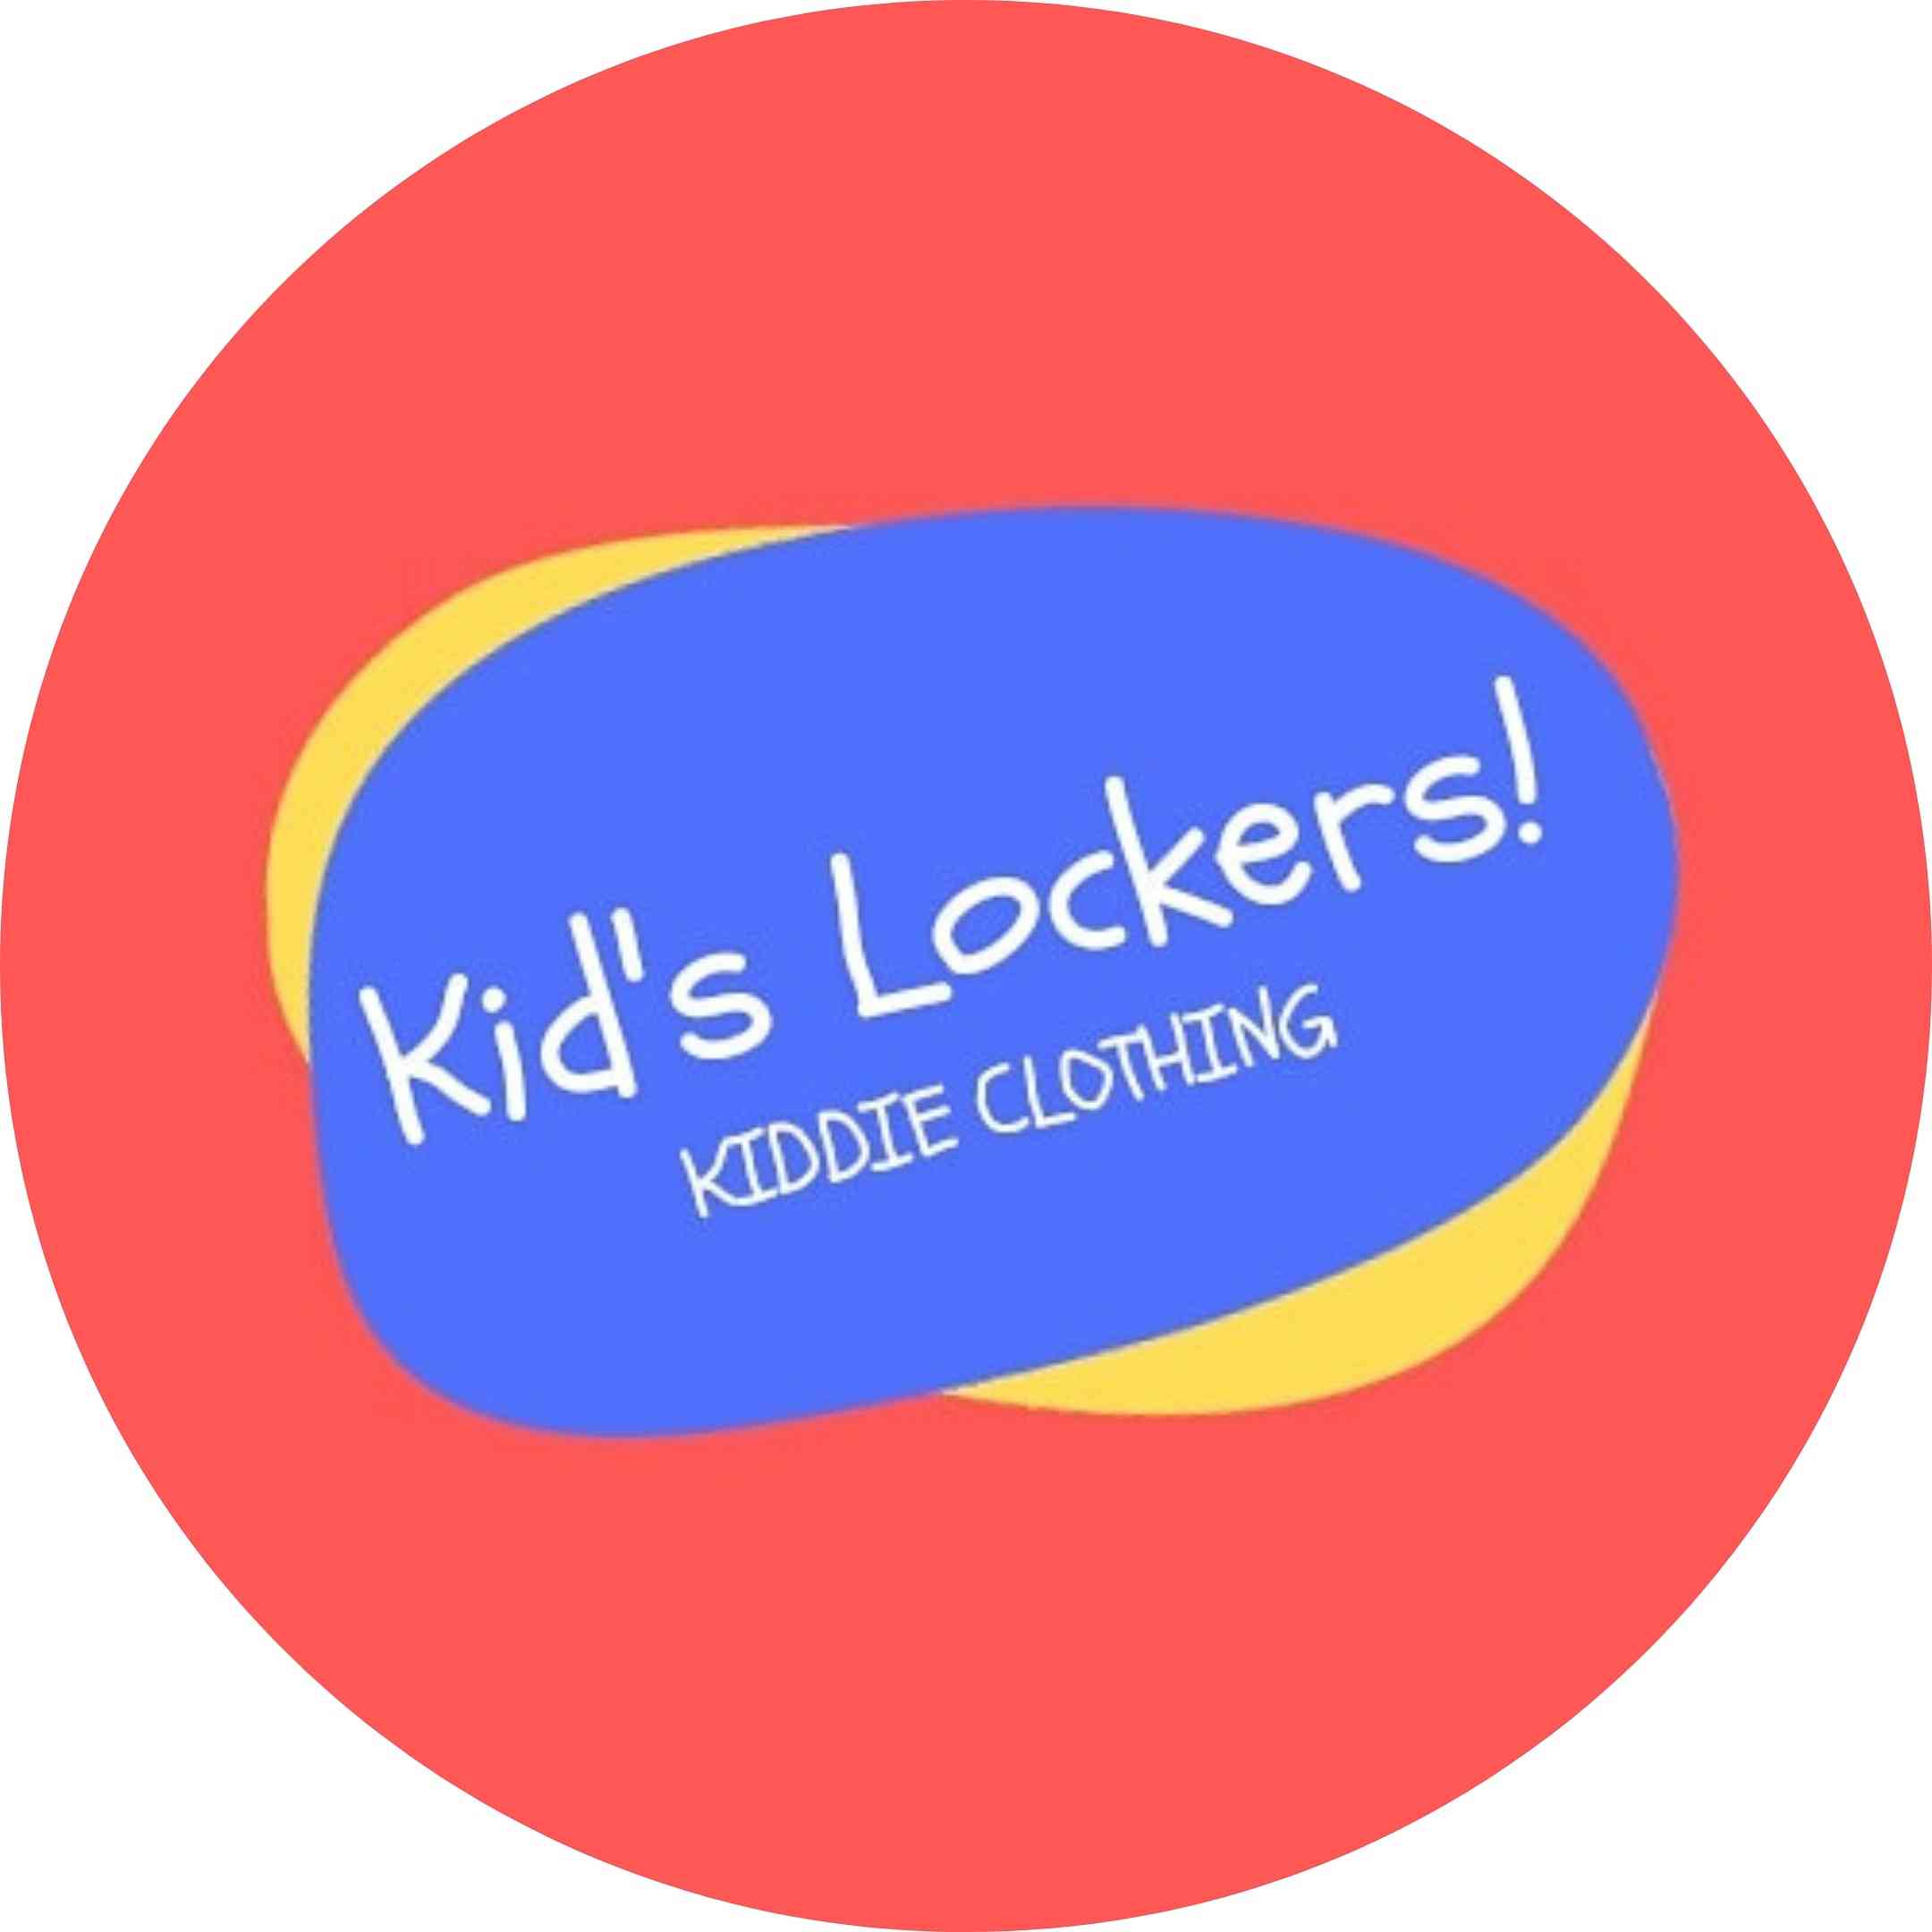 Kid's Lockers